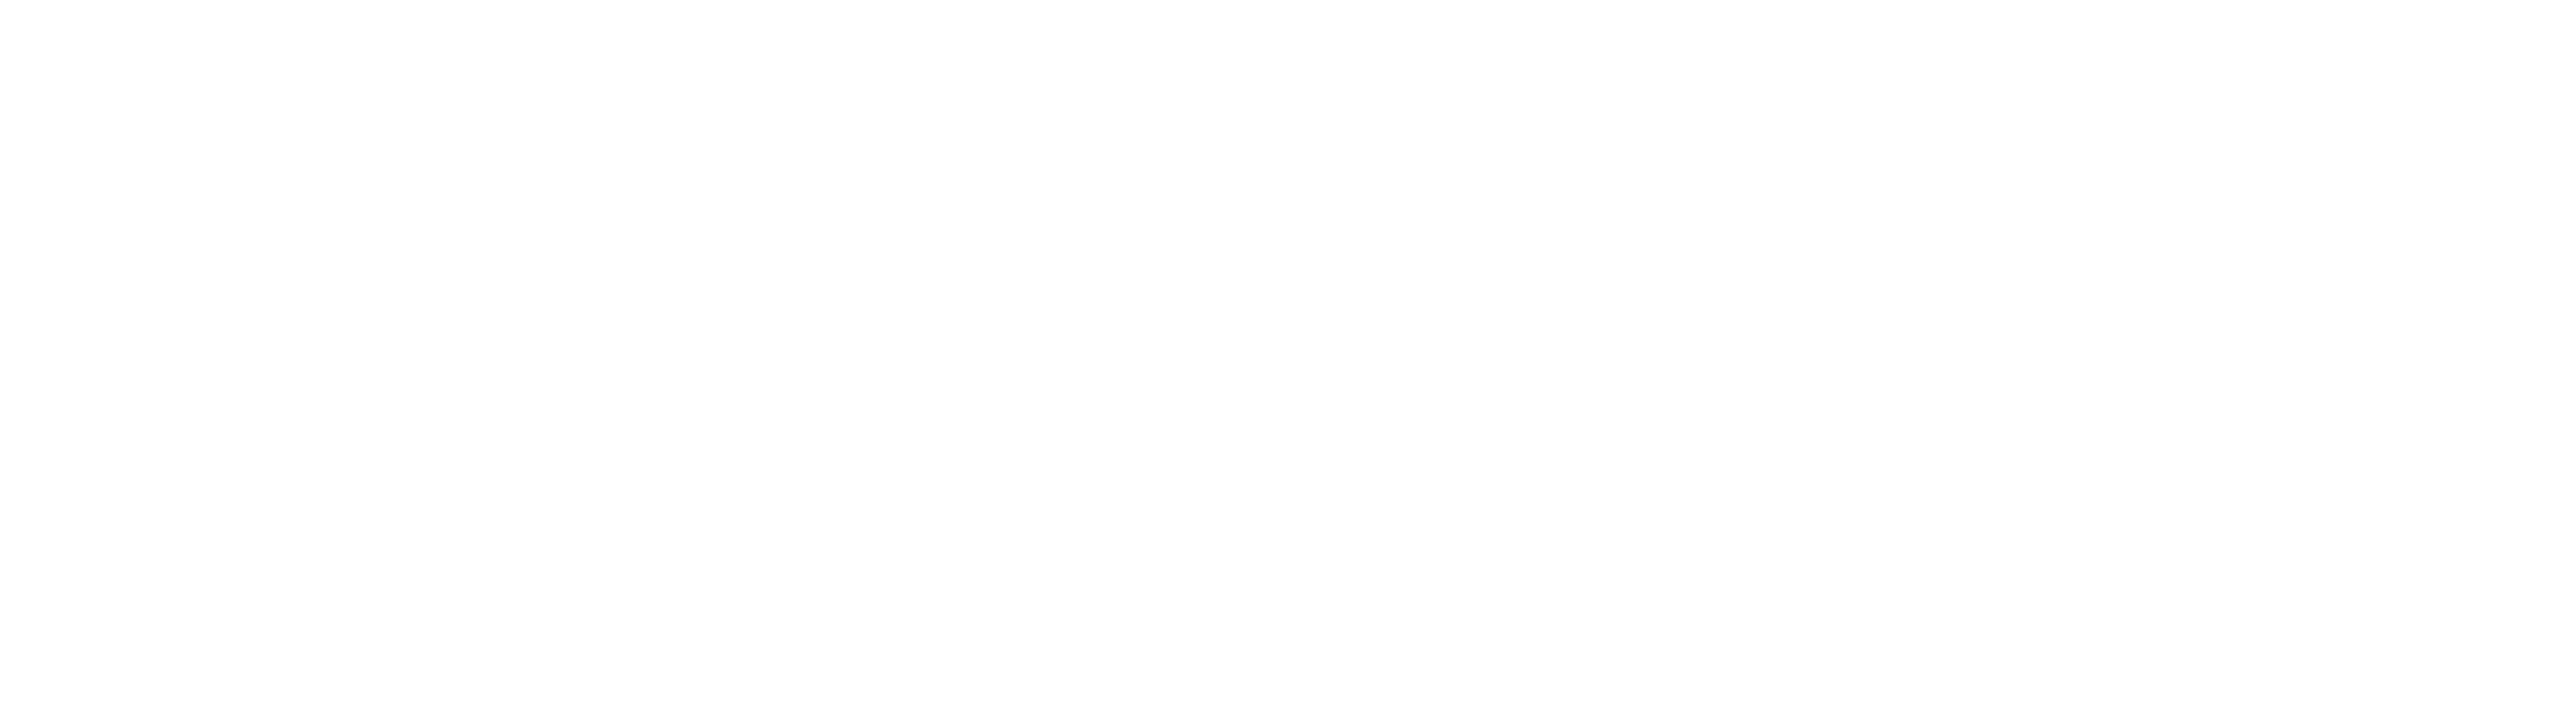 IZZYEVE_Logos-04